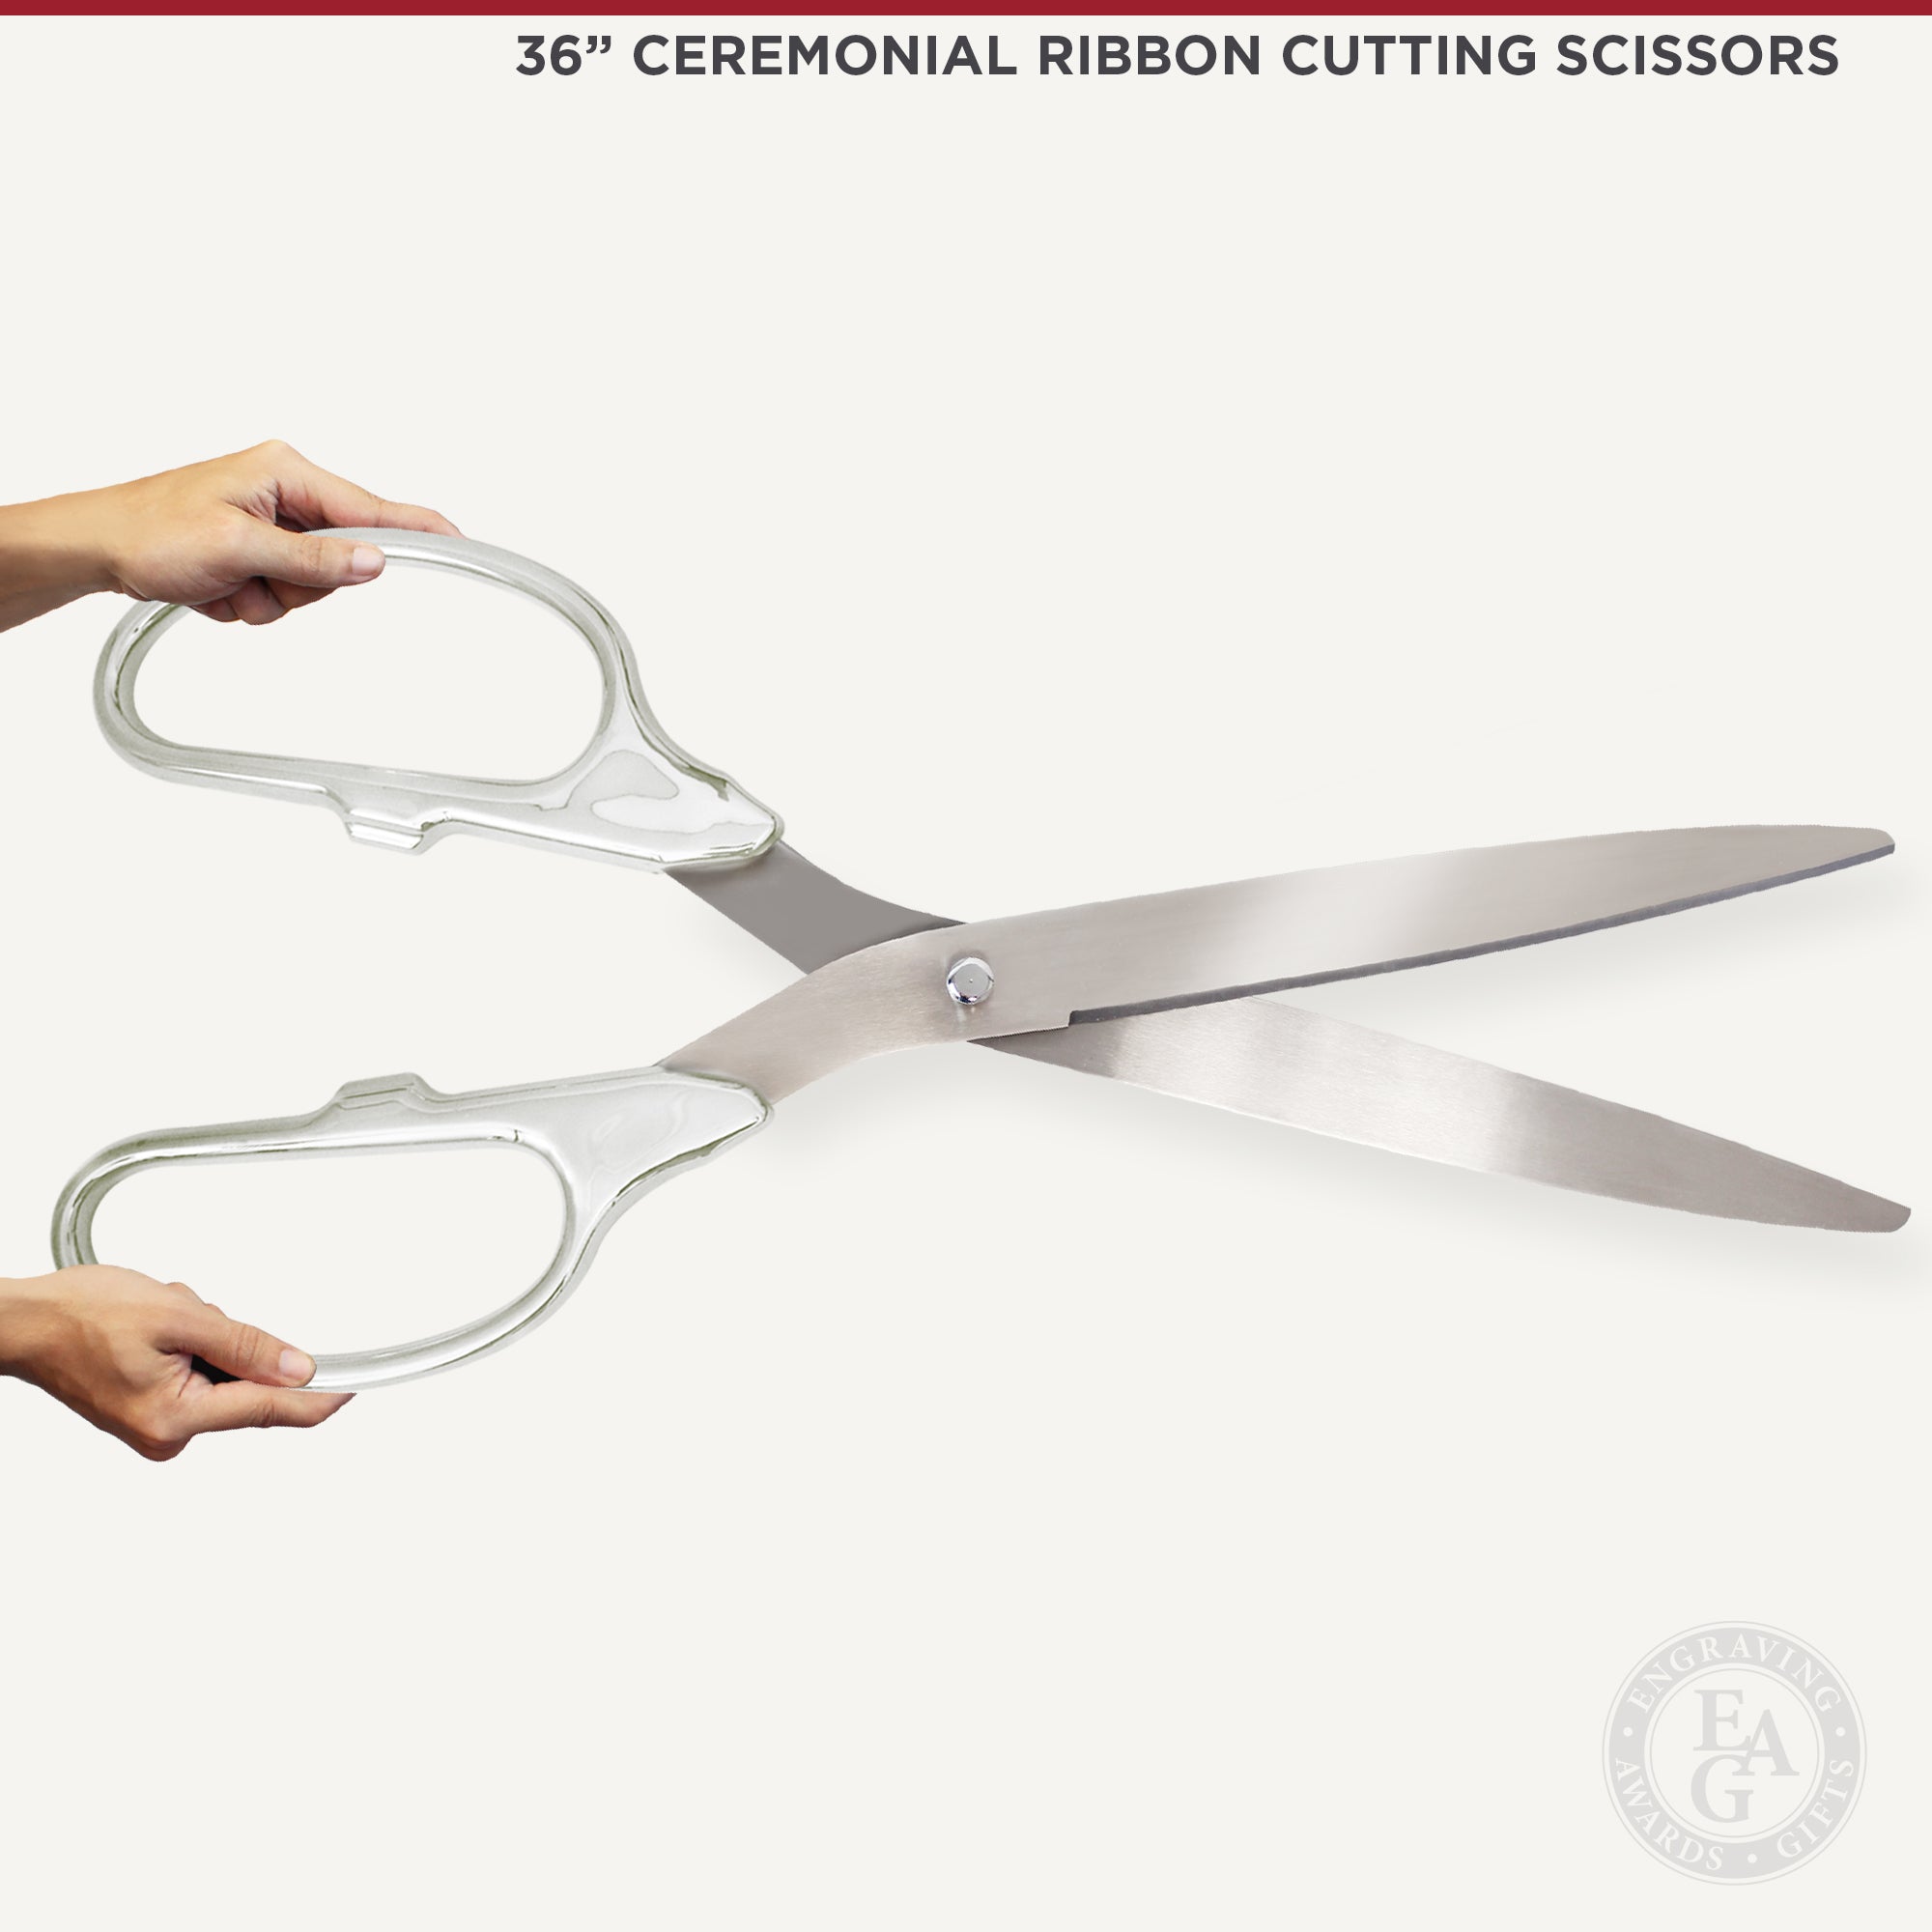 Glass Blown Sewing Scissors Ornament